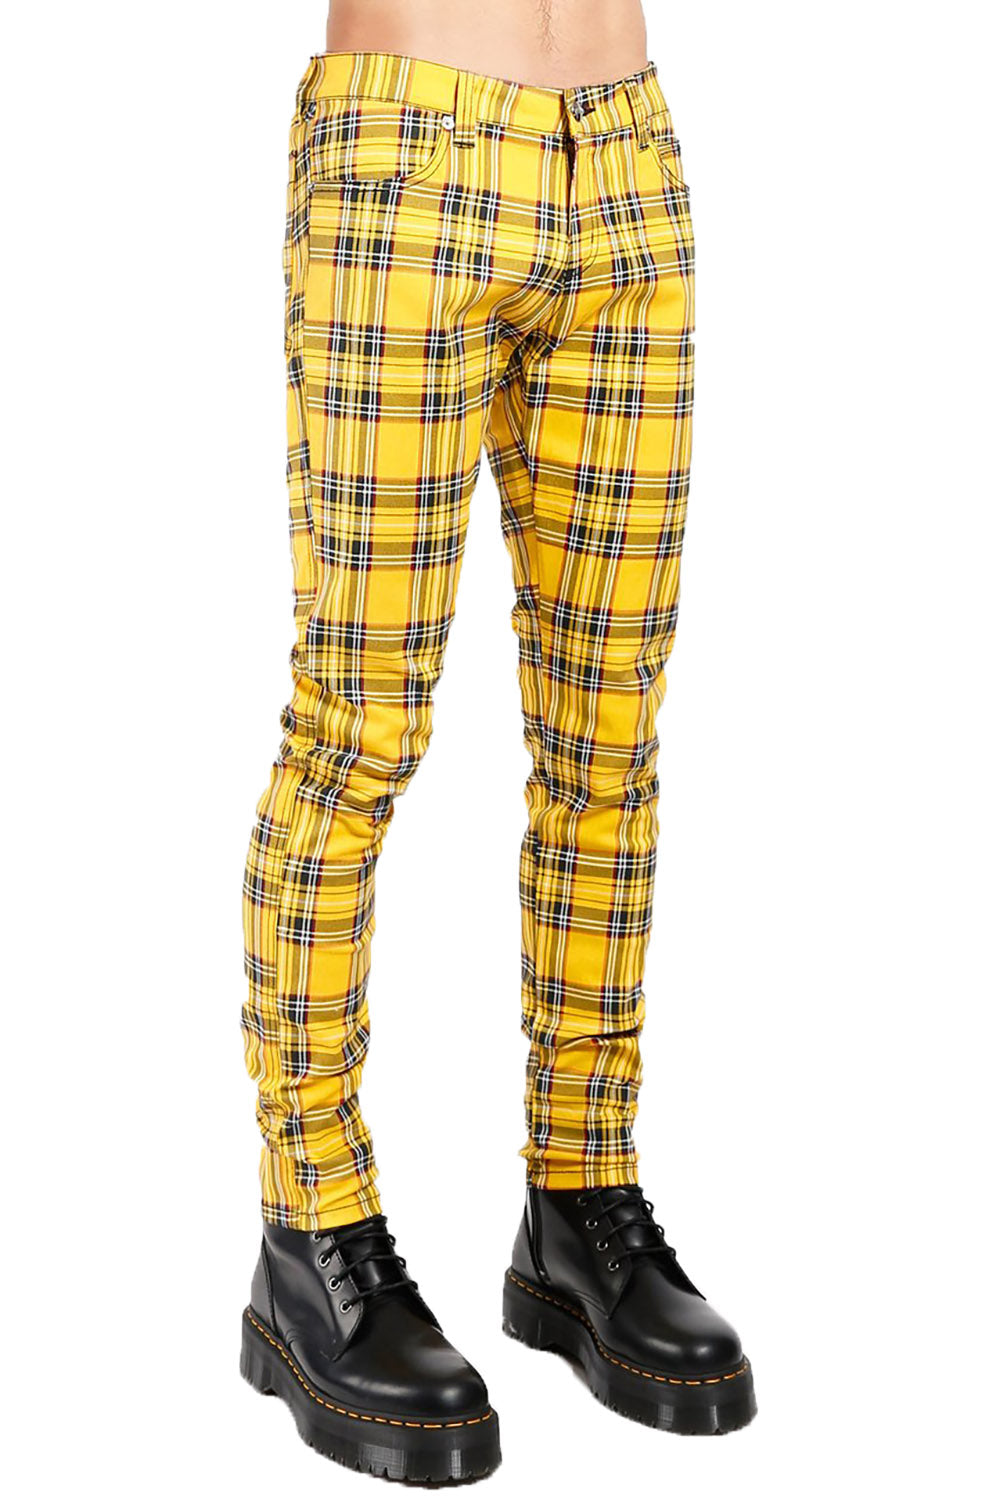 Black & Yellow Plaid Pants - High Waisted Flares - Pull On Pants - Lulus